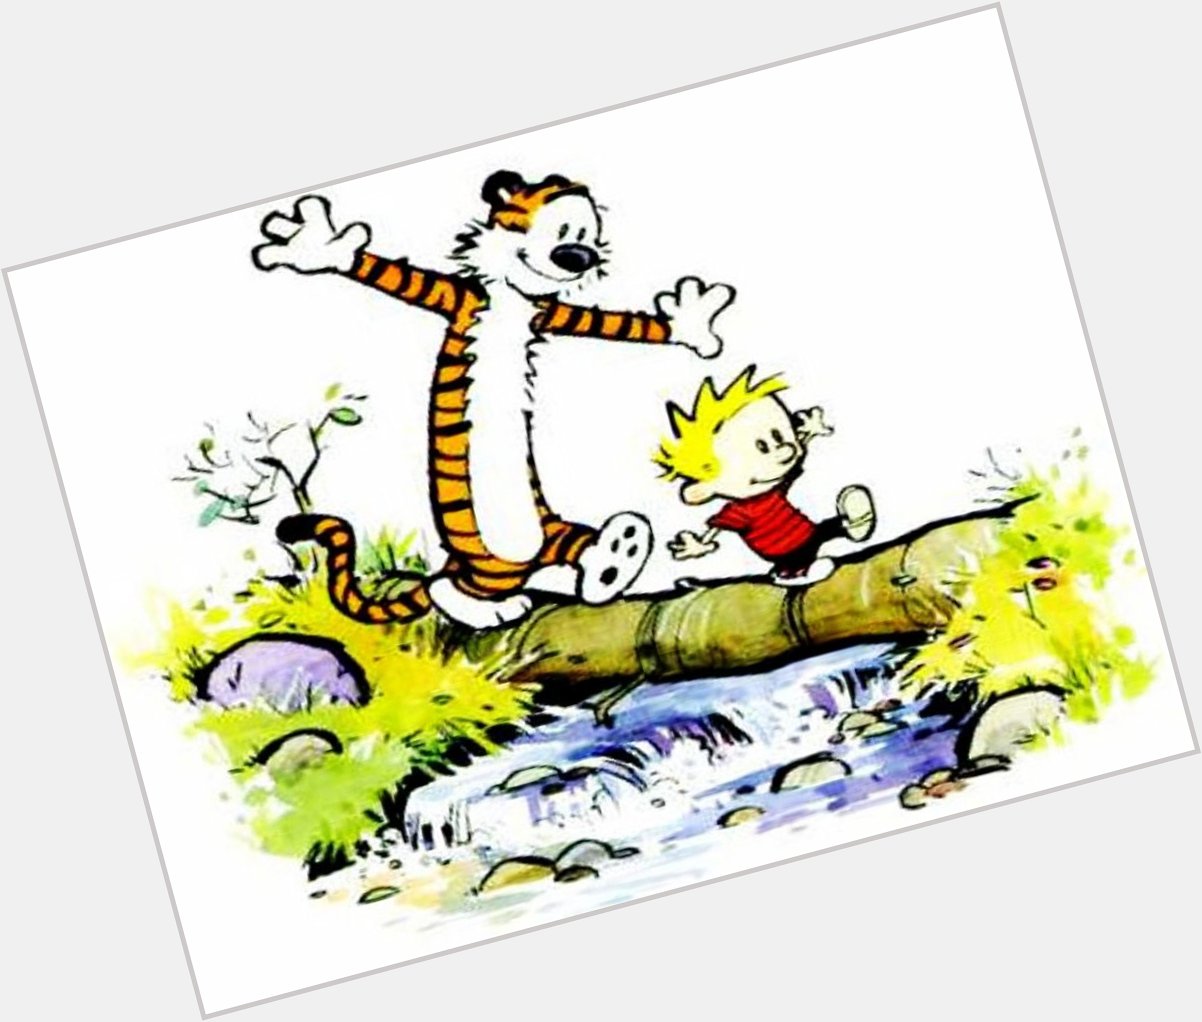 Happy Birthday to Bill Watterson, creator of Calvin and Hobbes! 